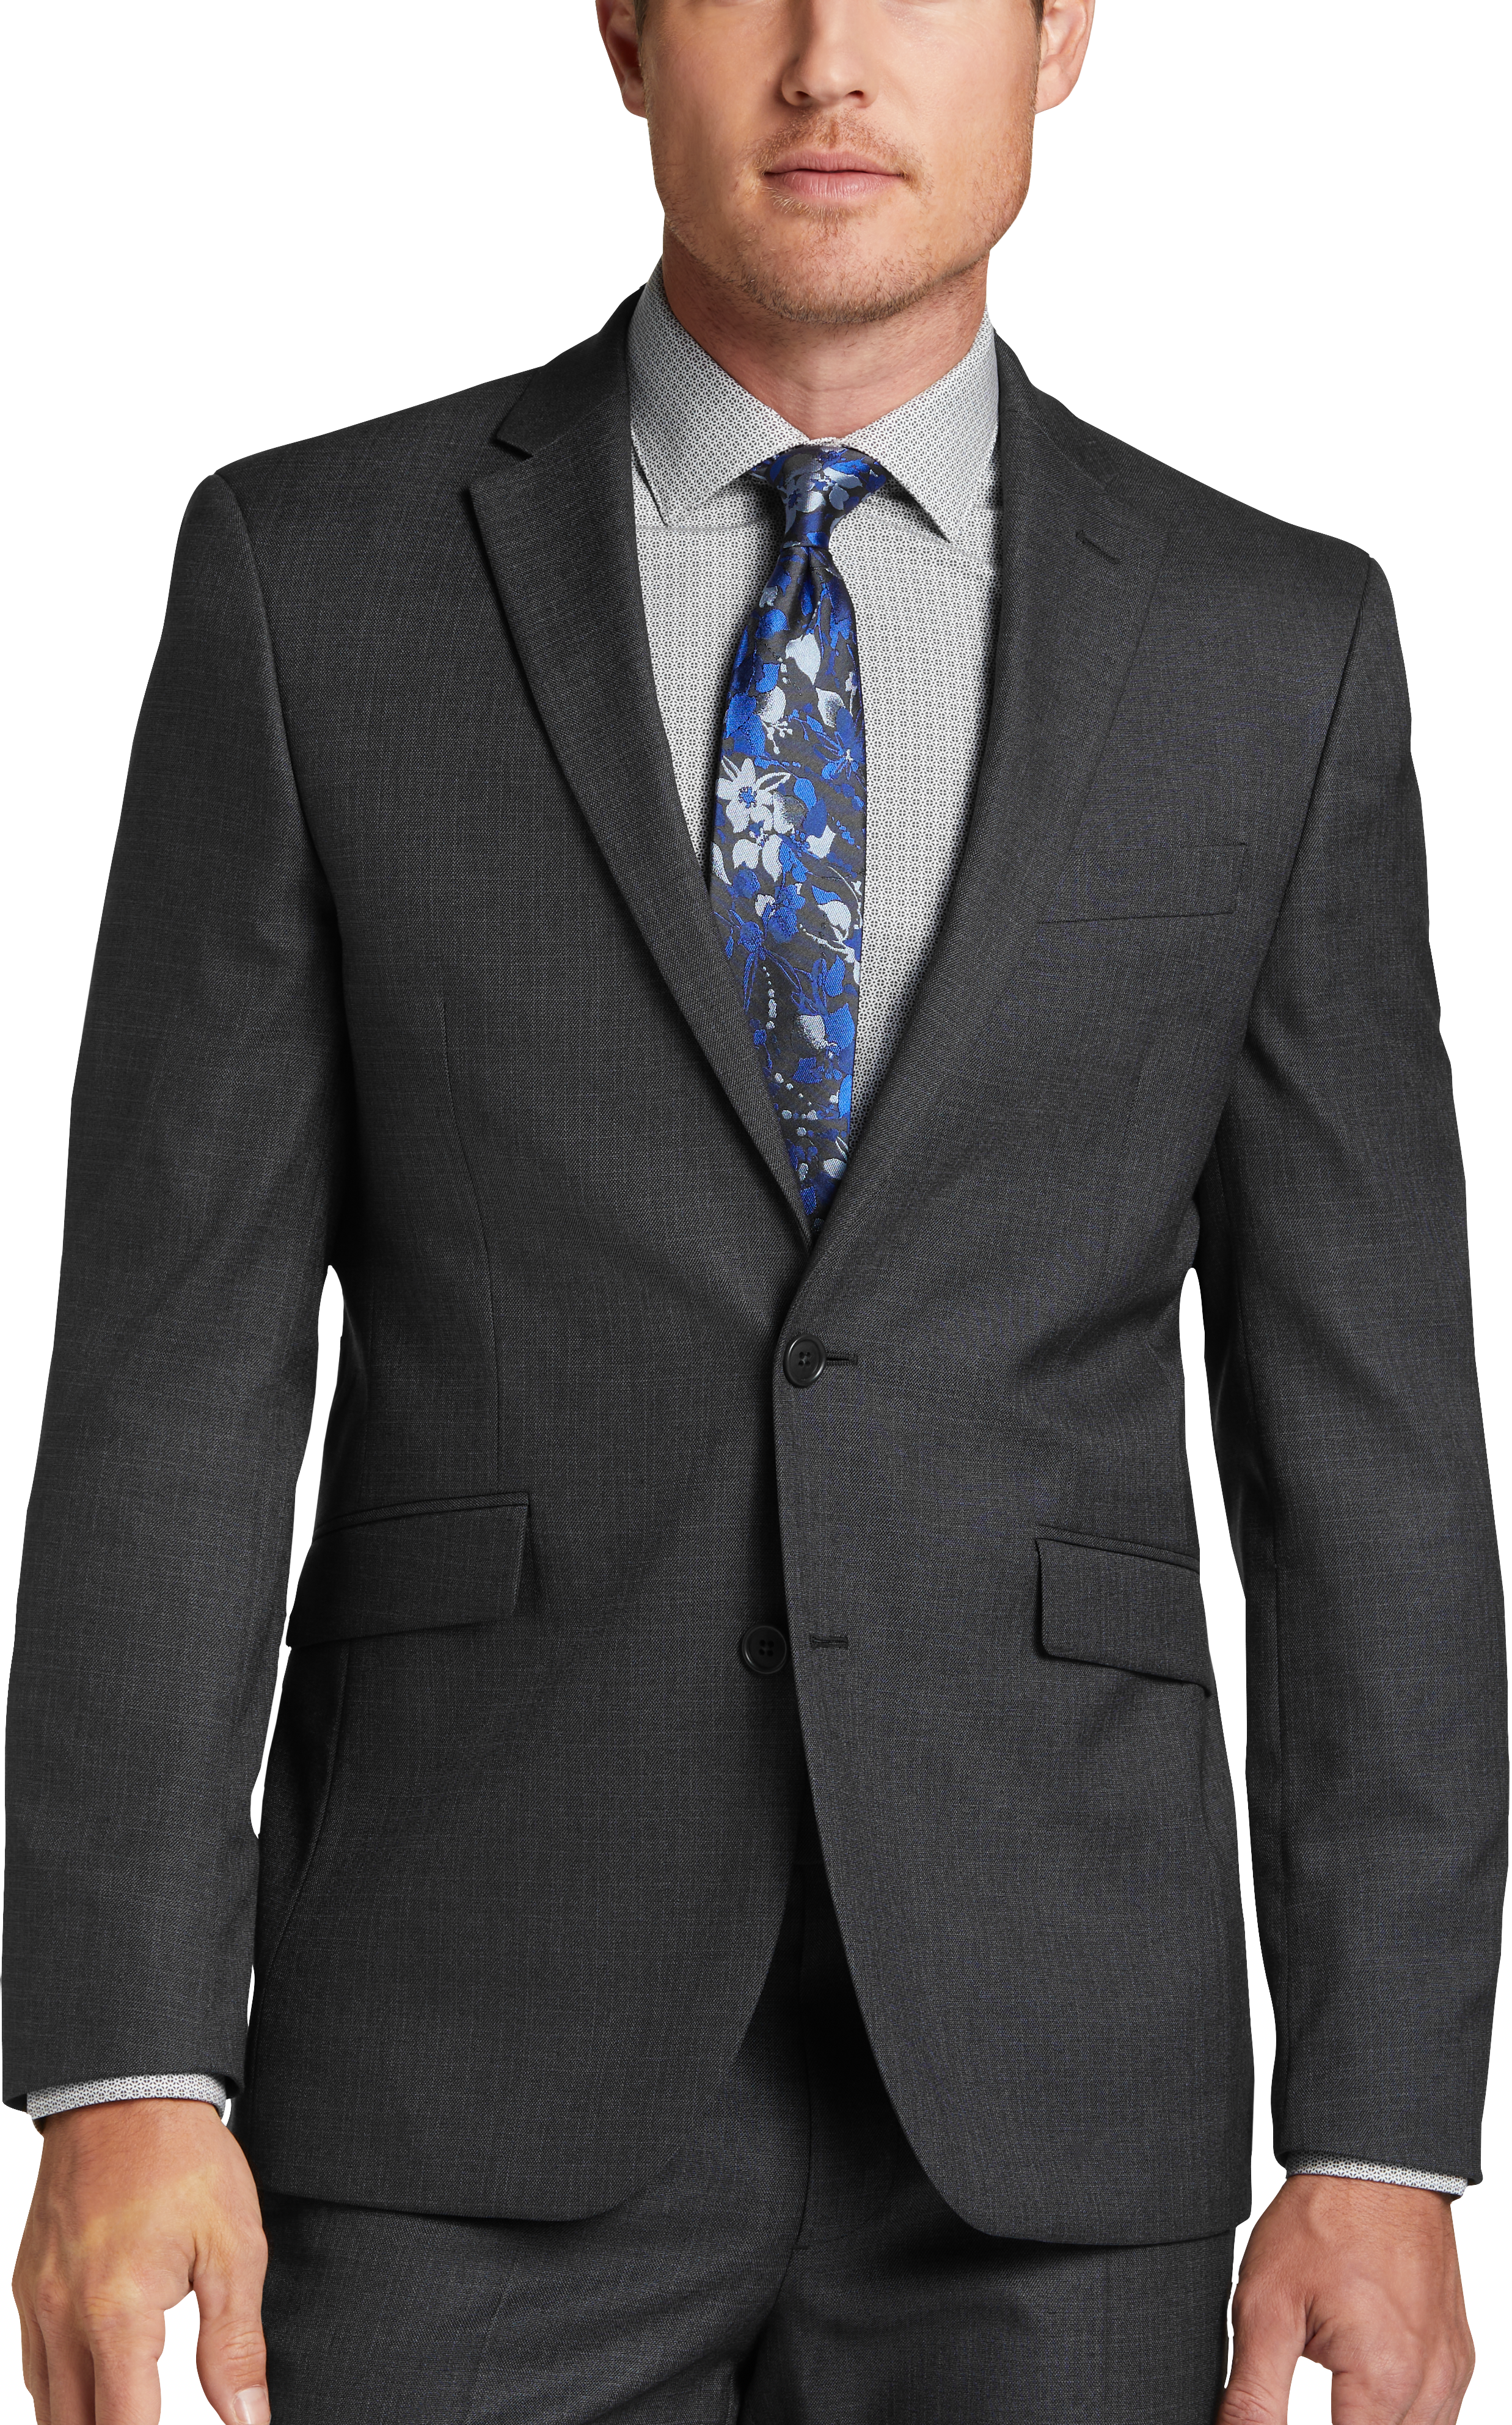 Wilke-Rodriguez Slim Fit Suit Separates Coat, Charcoal